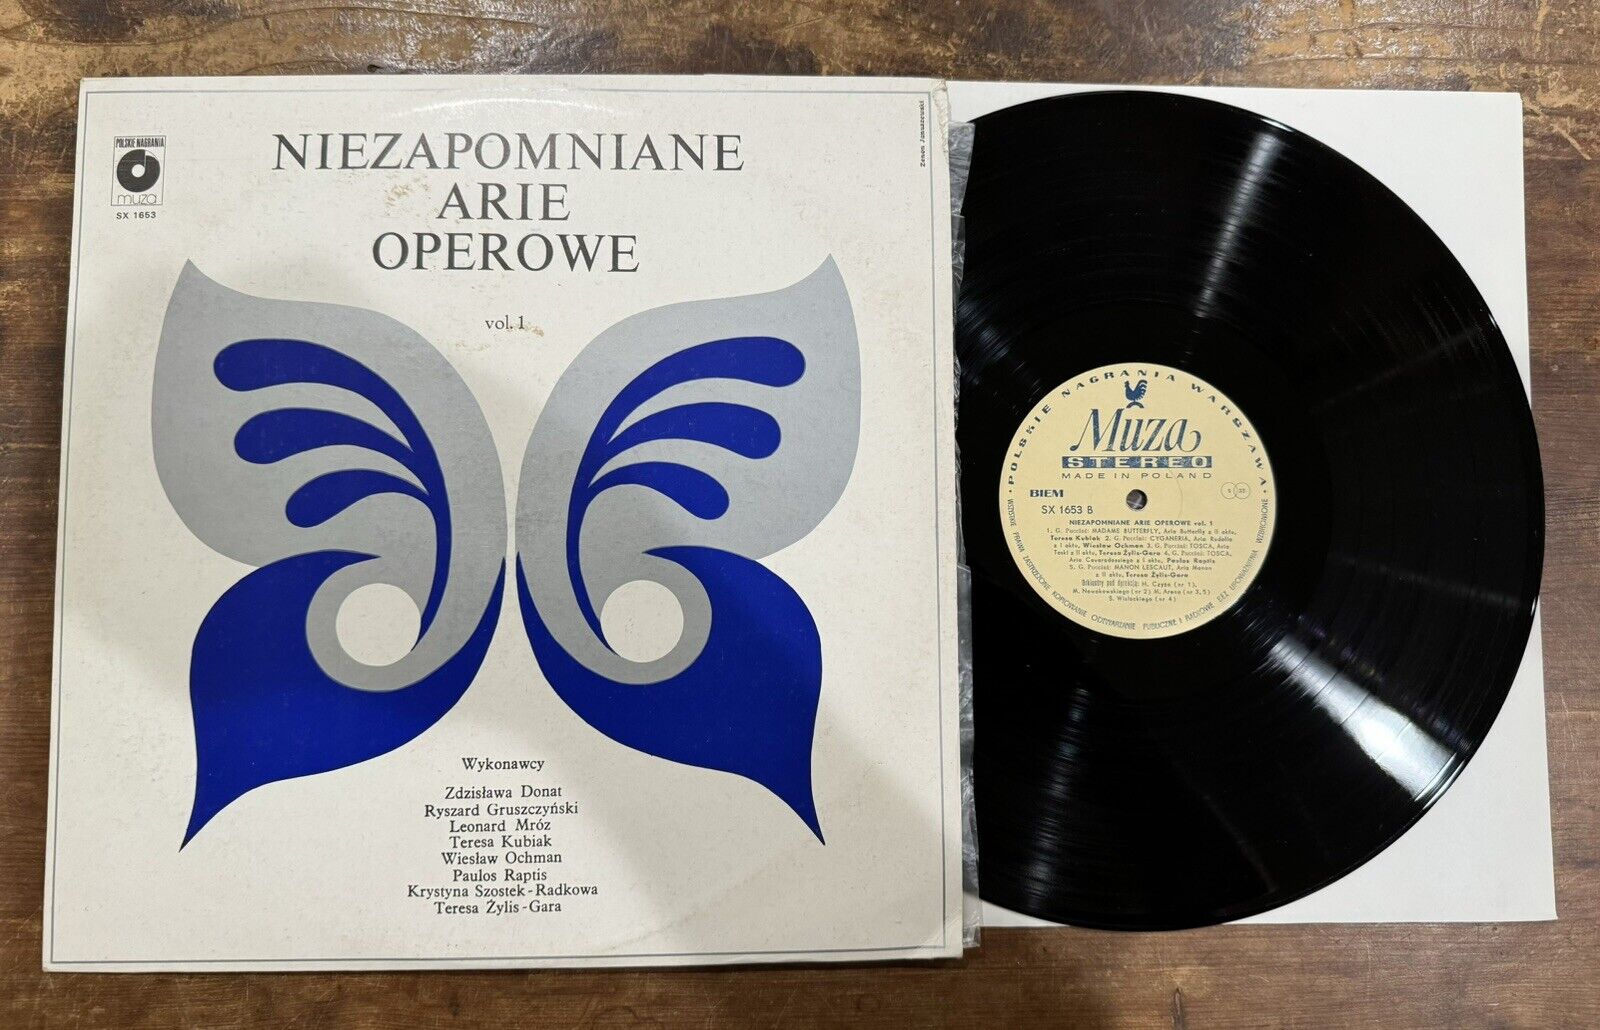 v/a Niezapomniane Arie Operowe Vol. 1 LP Muza SX 1653 - Polish - Opera - NM